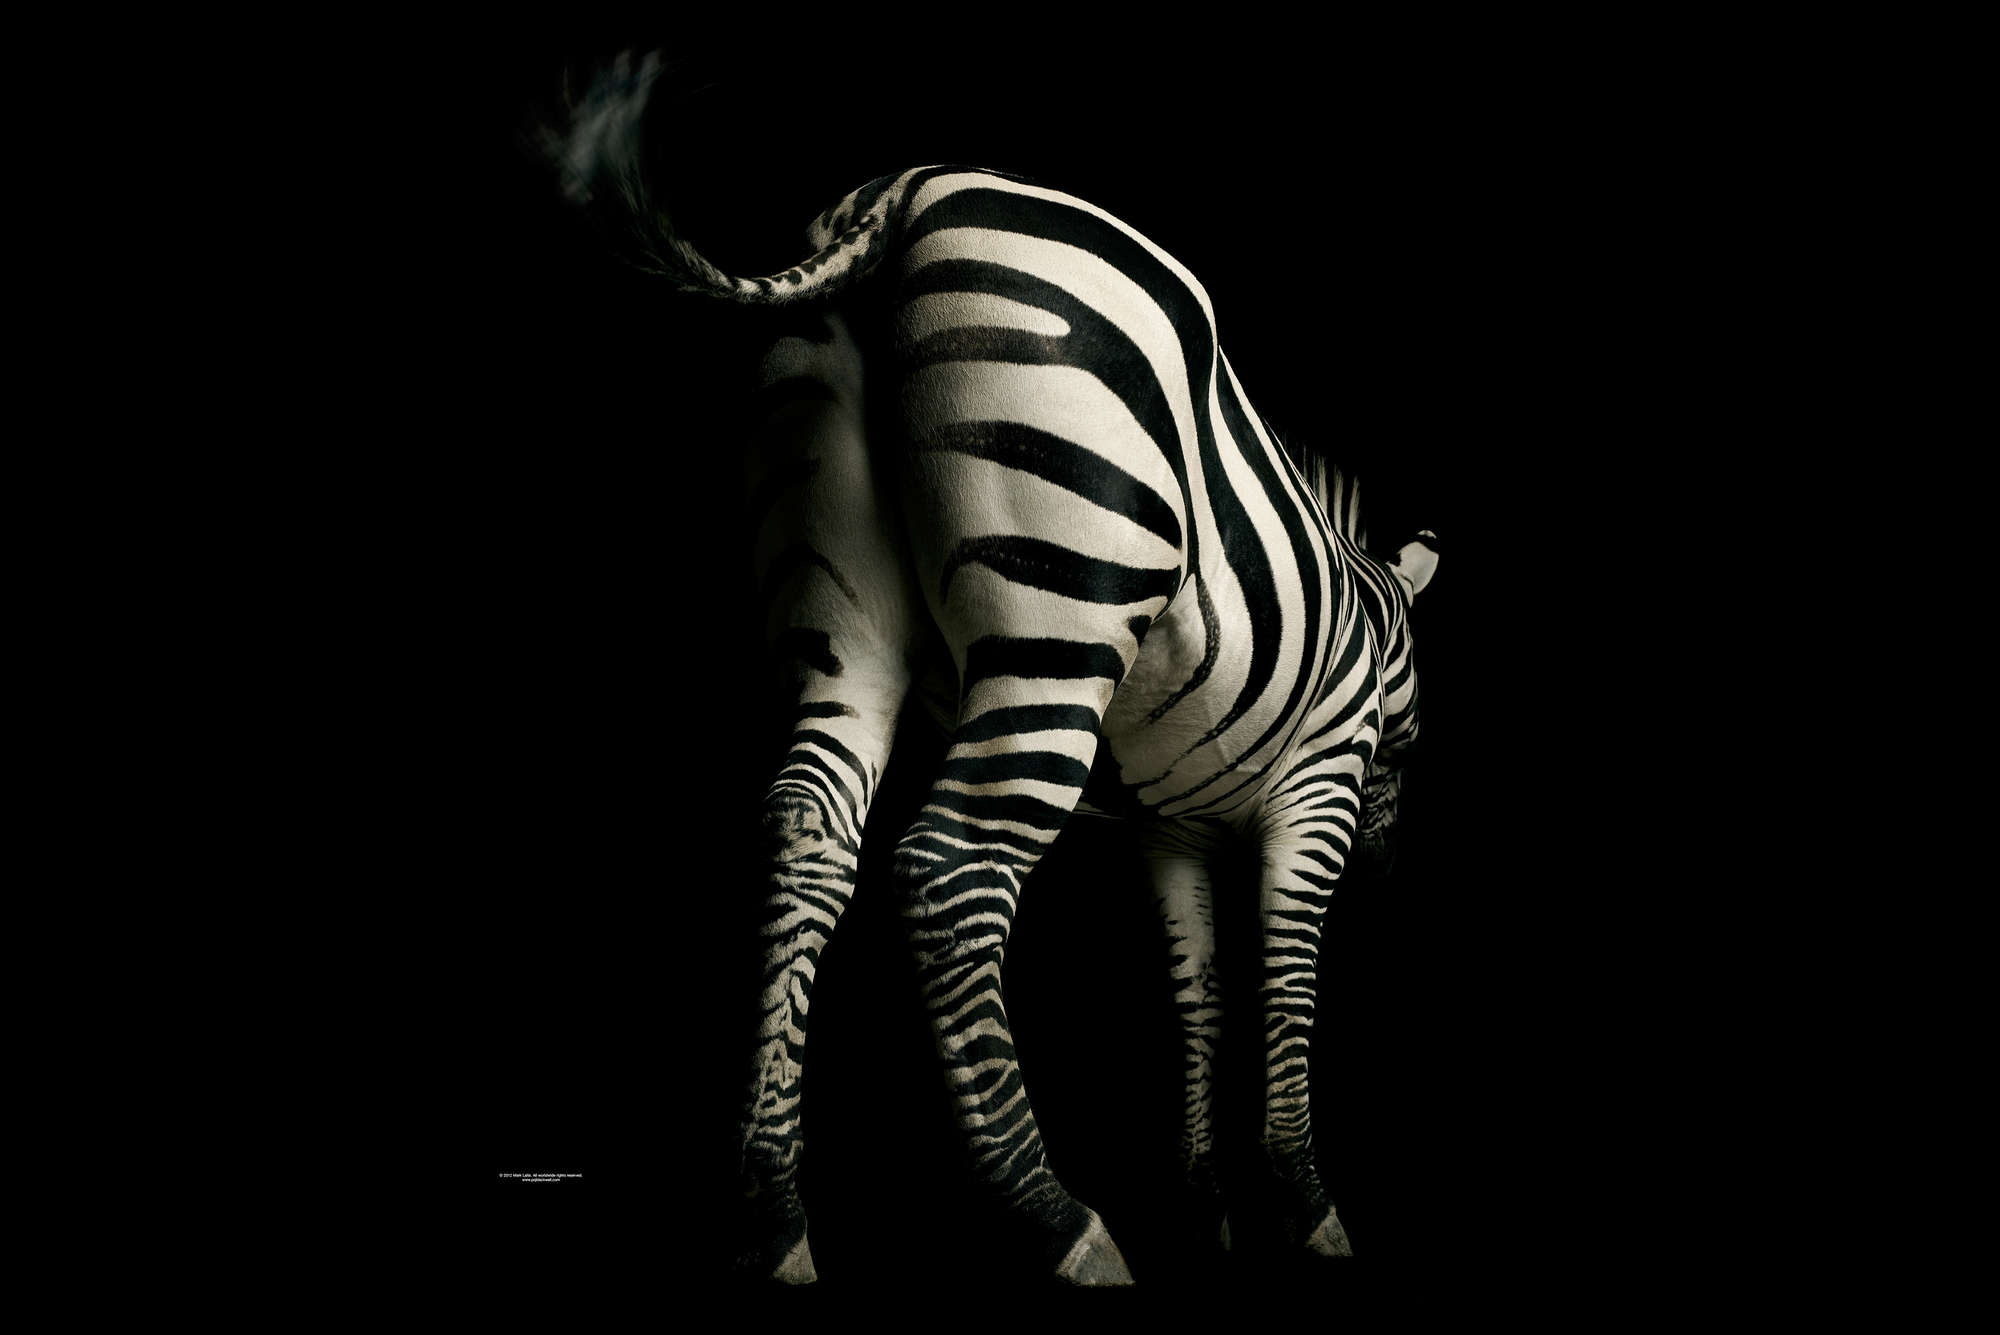             Zebra back - animal portrait mural
        